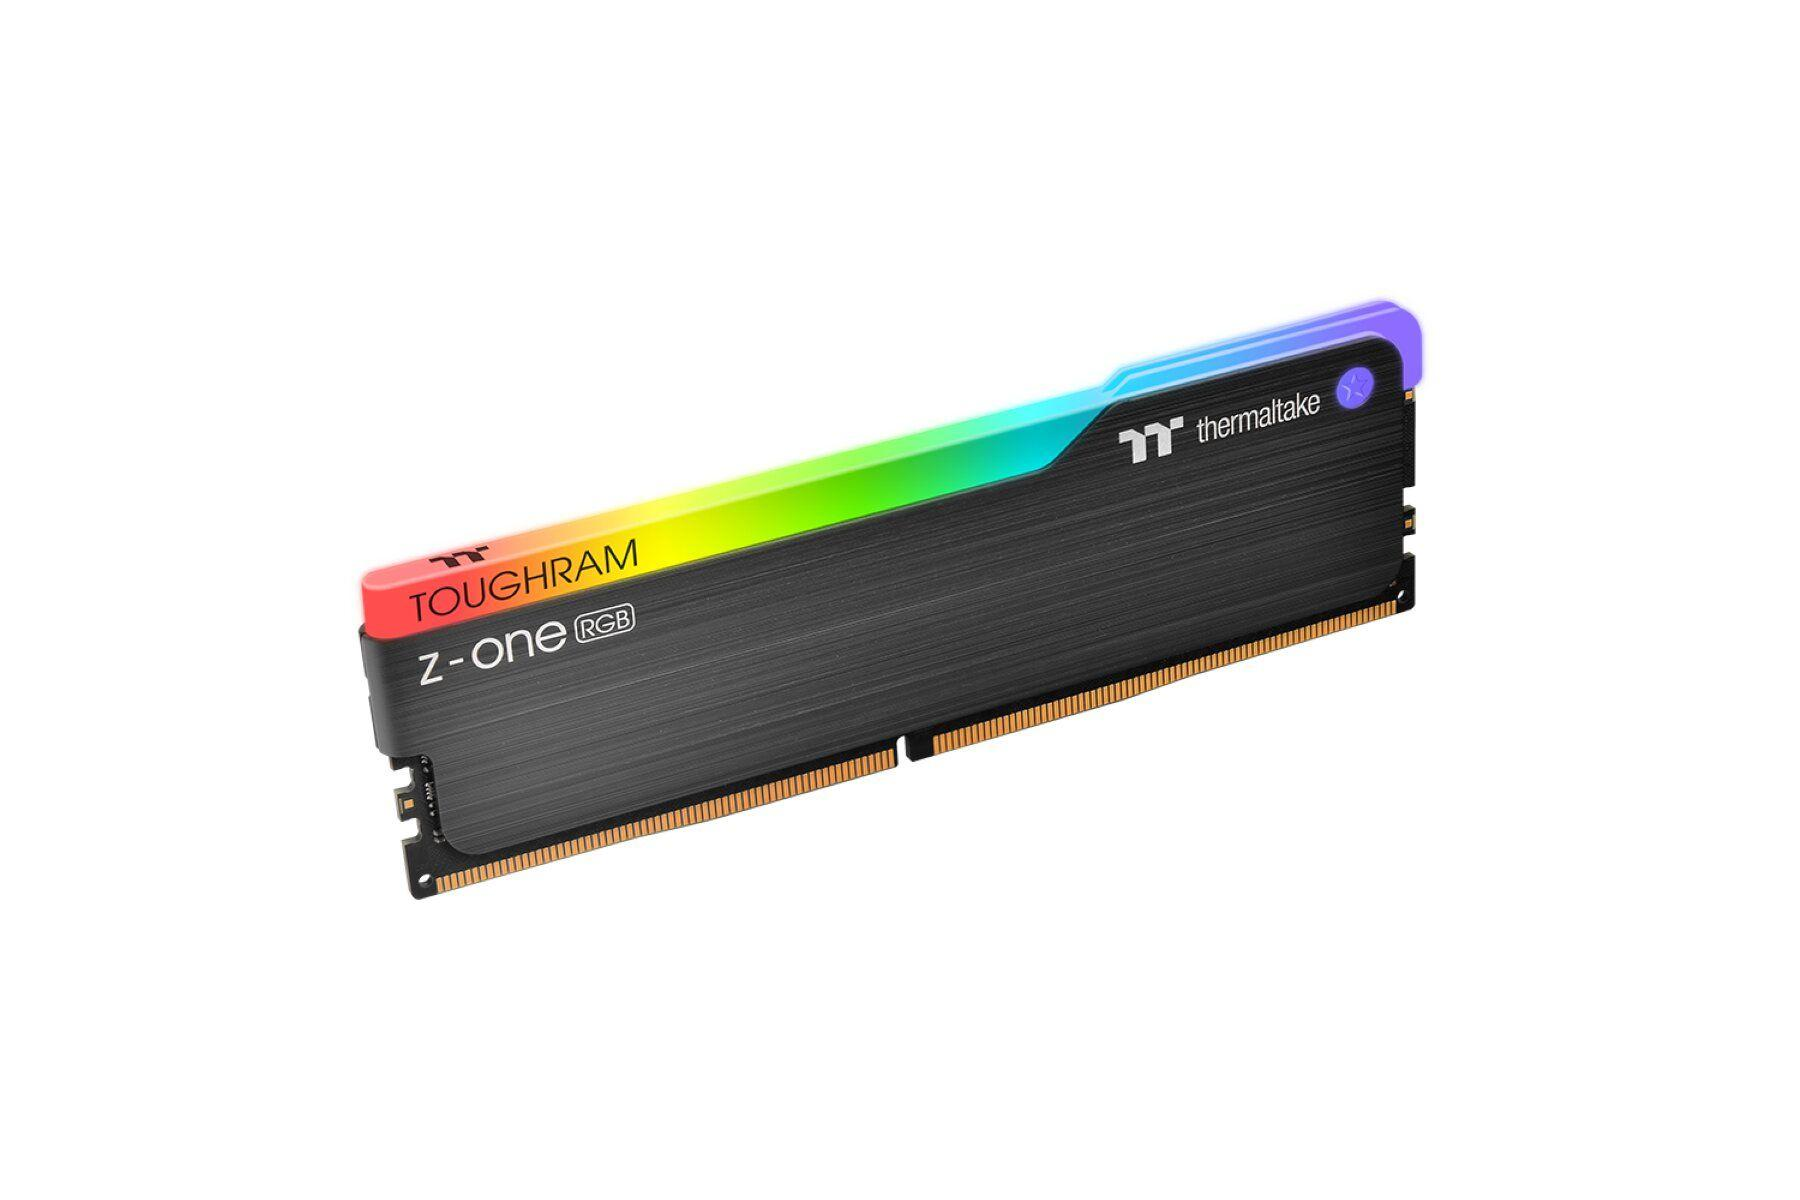 RGB Z-ONE TOUGHRAM DDR4 GB 16 THERMALTAKE Arbeitsspeicher